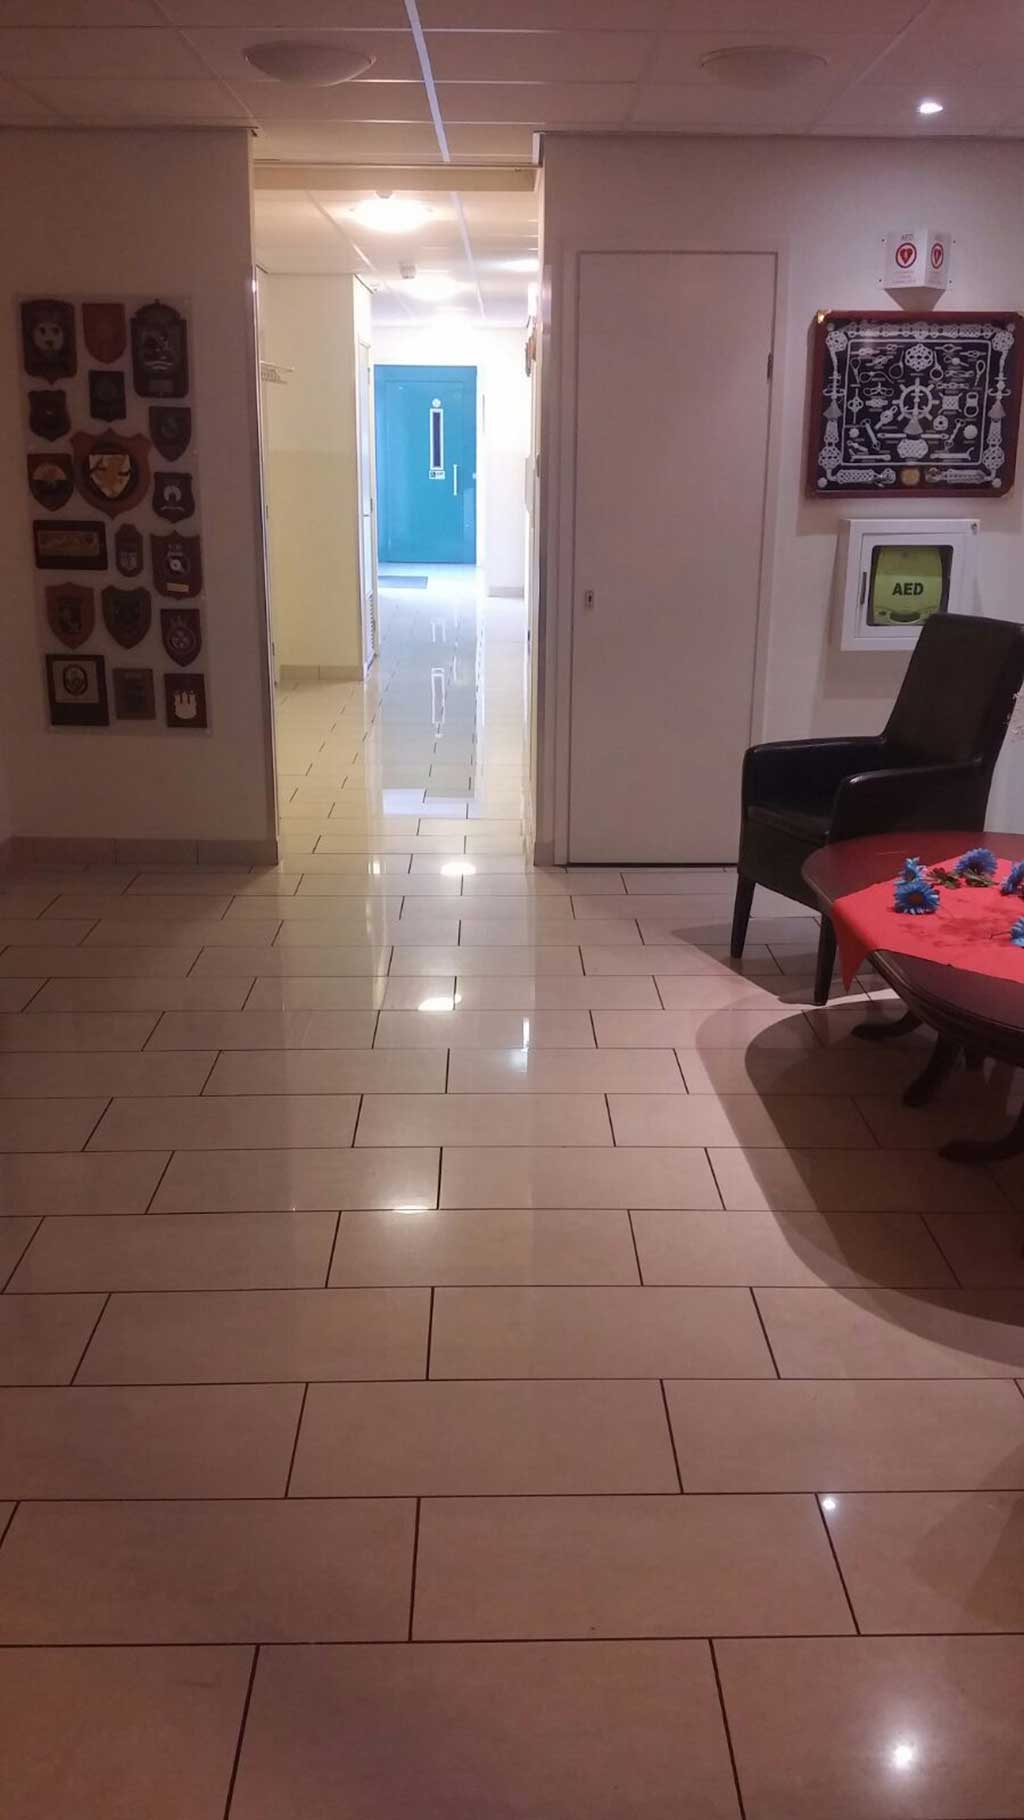 GripFactory TitaniumGrip Anti-Slip - tile floor hallway